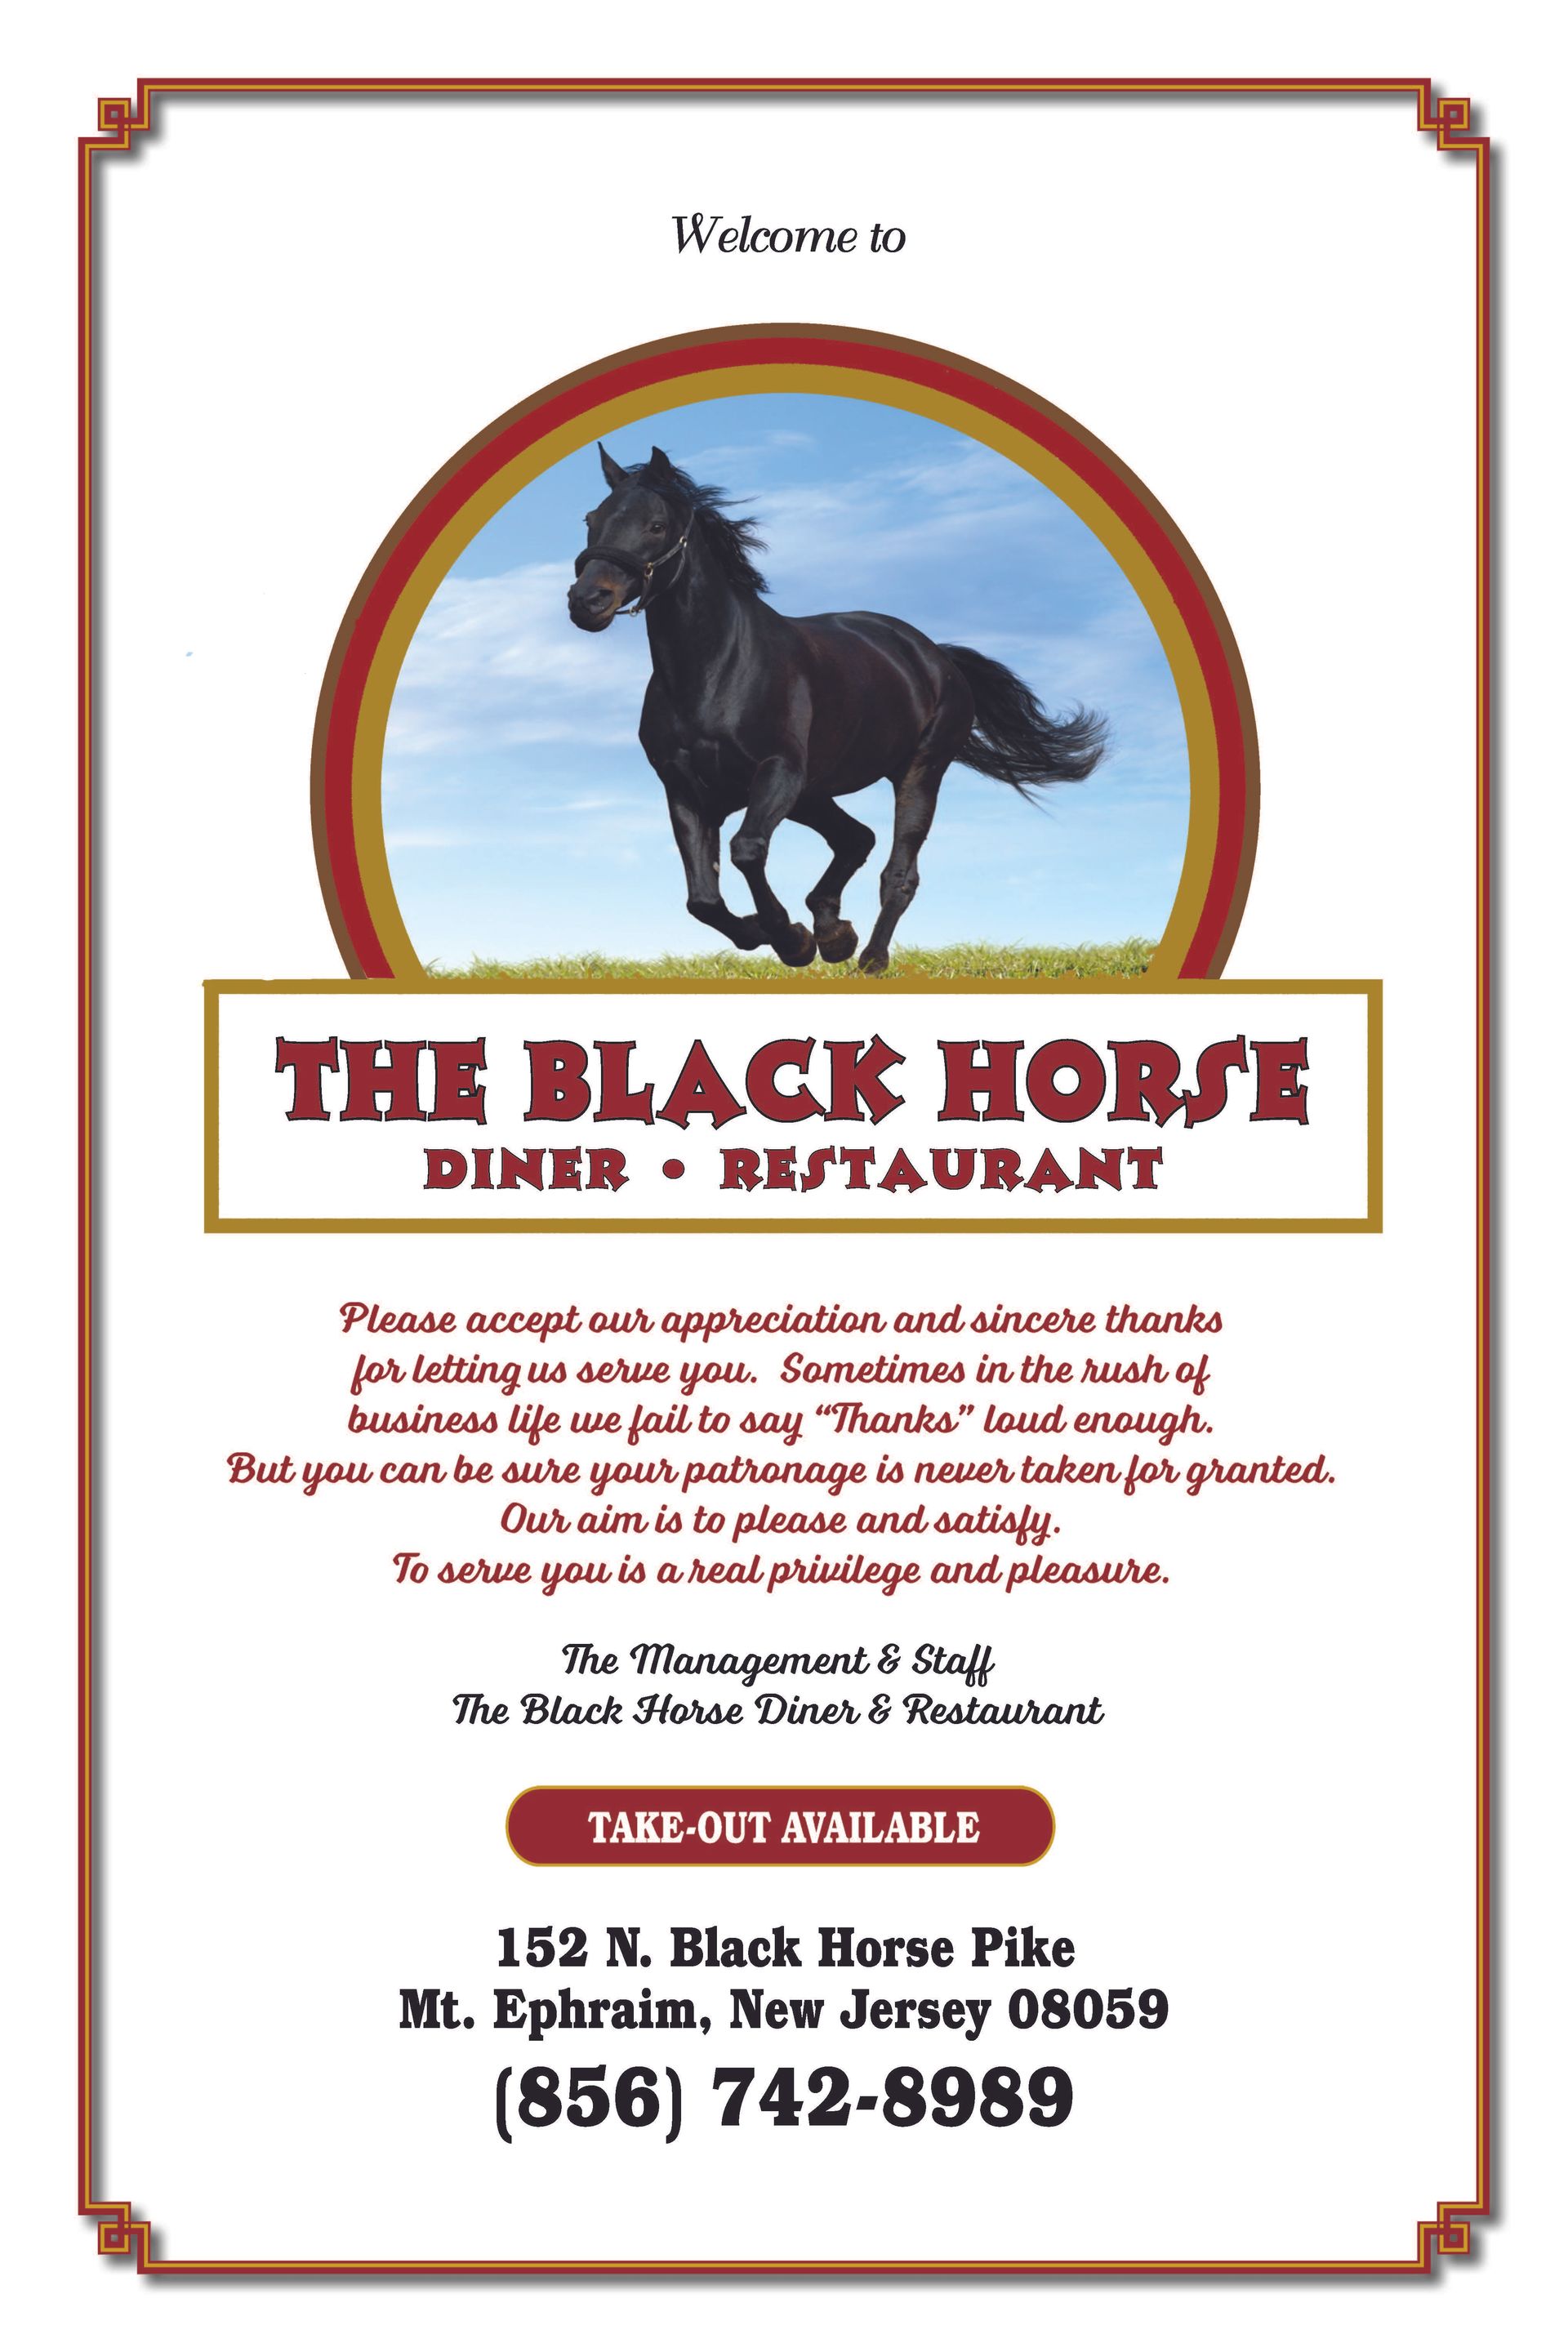 an advertisement for the black horse diner and restaurant — The Black Horse Breakfast in Ephraim, NJ